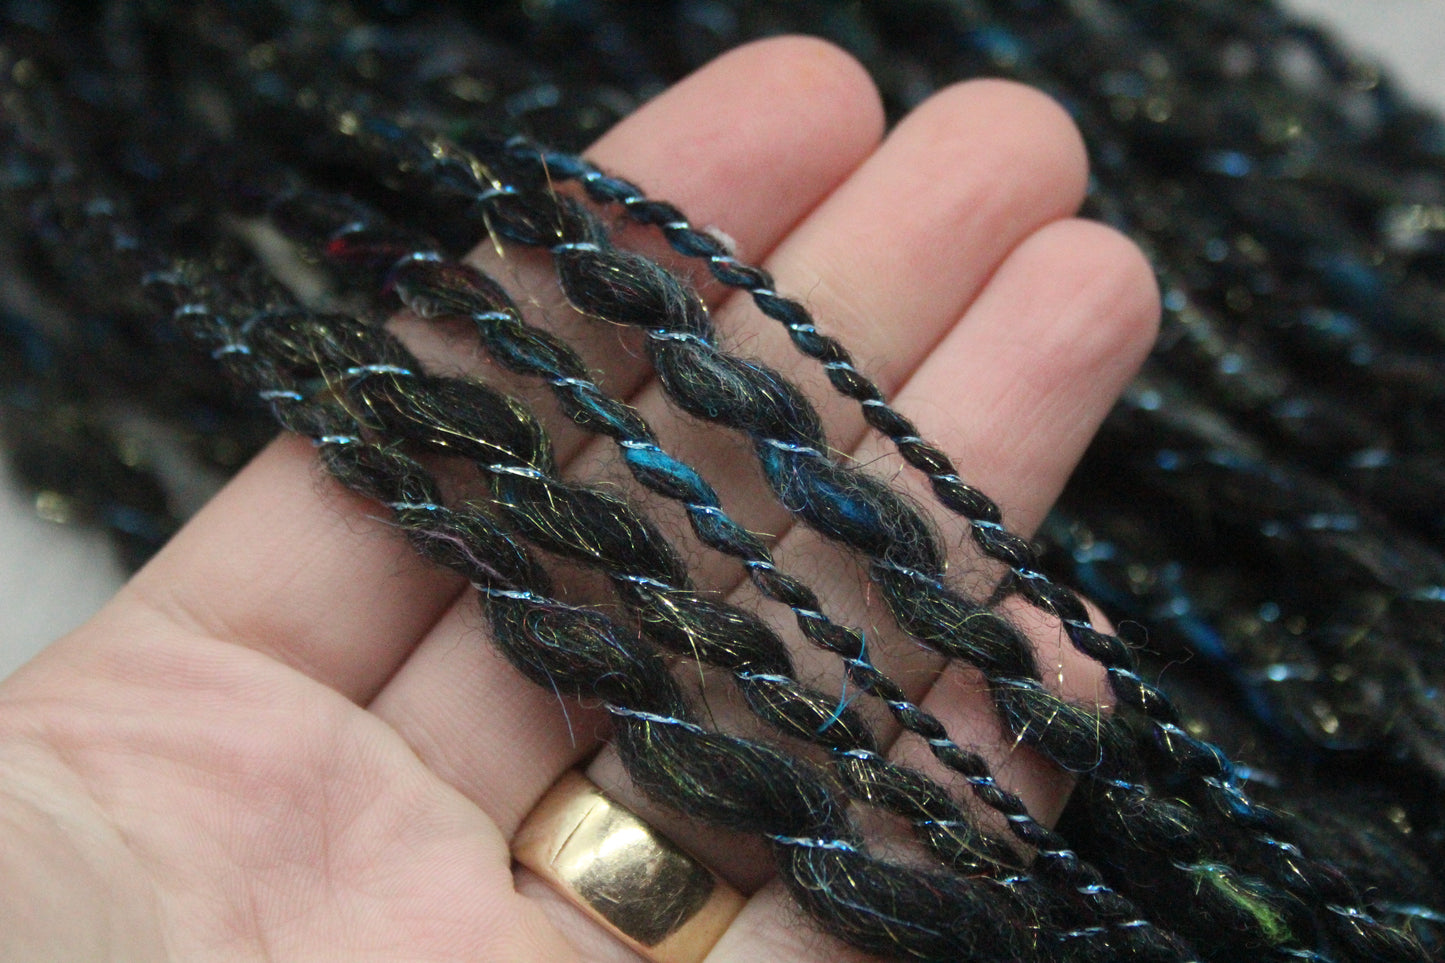 Handspun Yarn - Black and Blue - 29mtrs/32yards 40g/1.4oz - Yarn for crocheting. knitting, weaving...